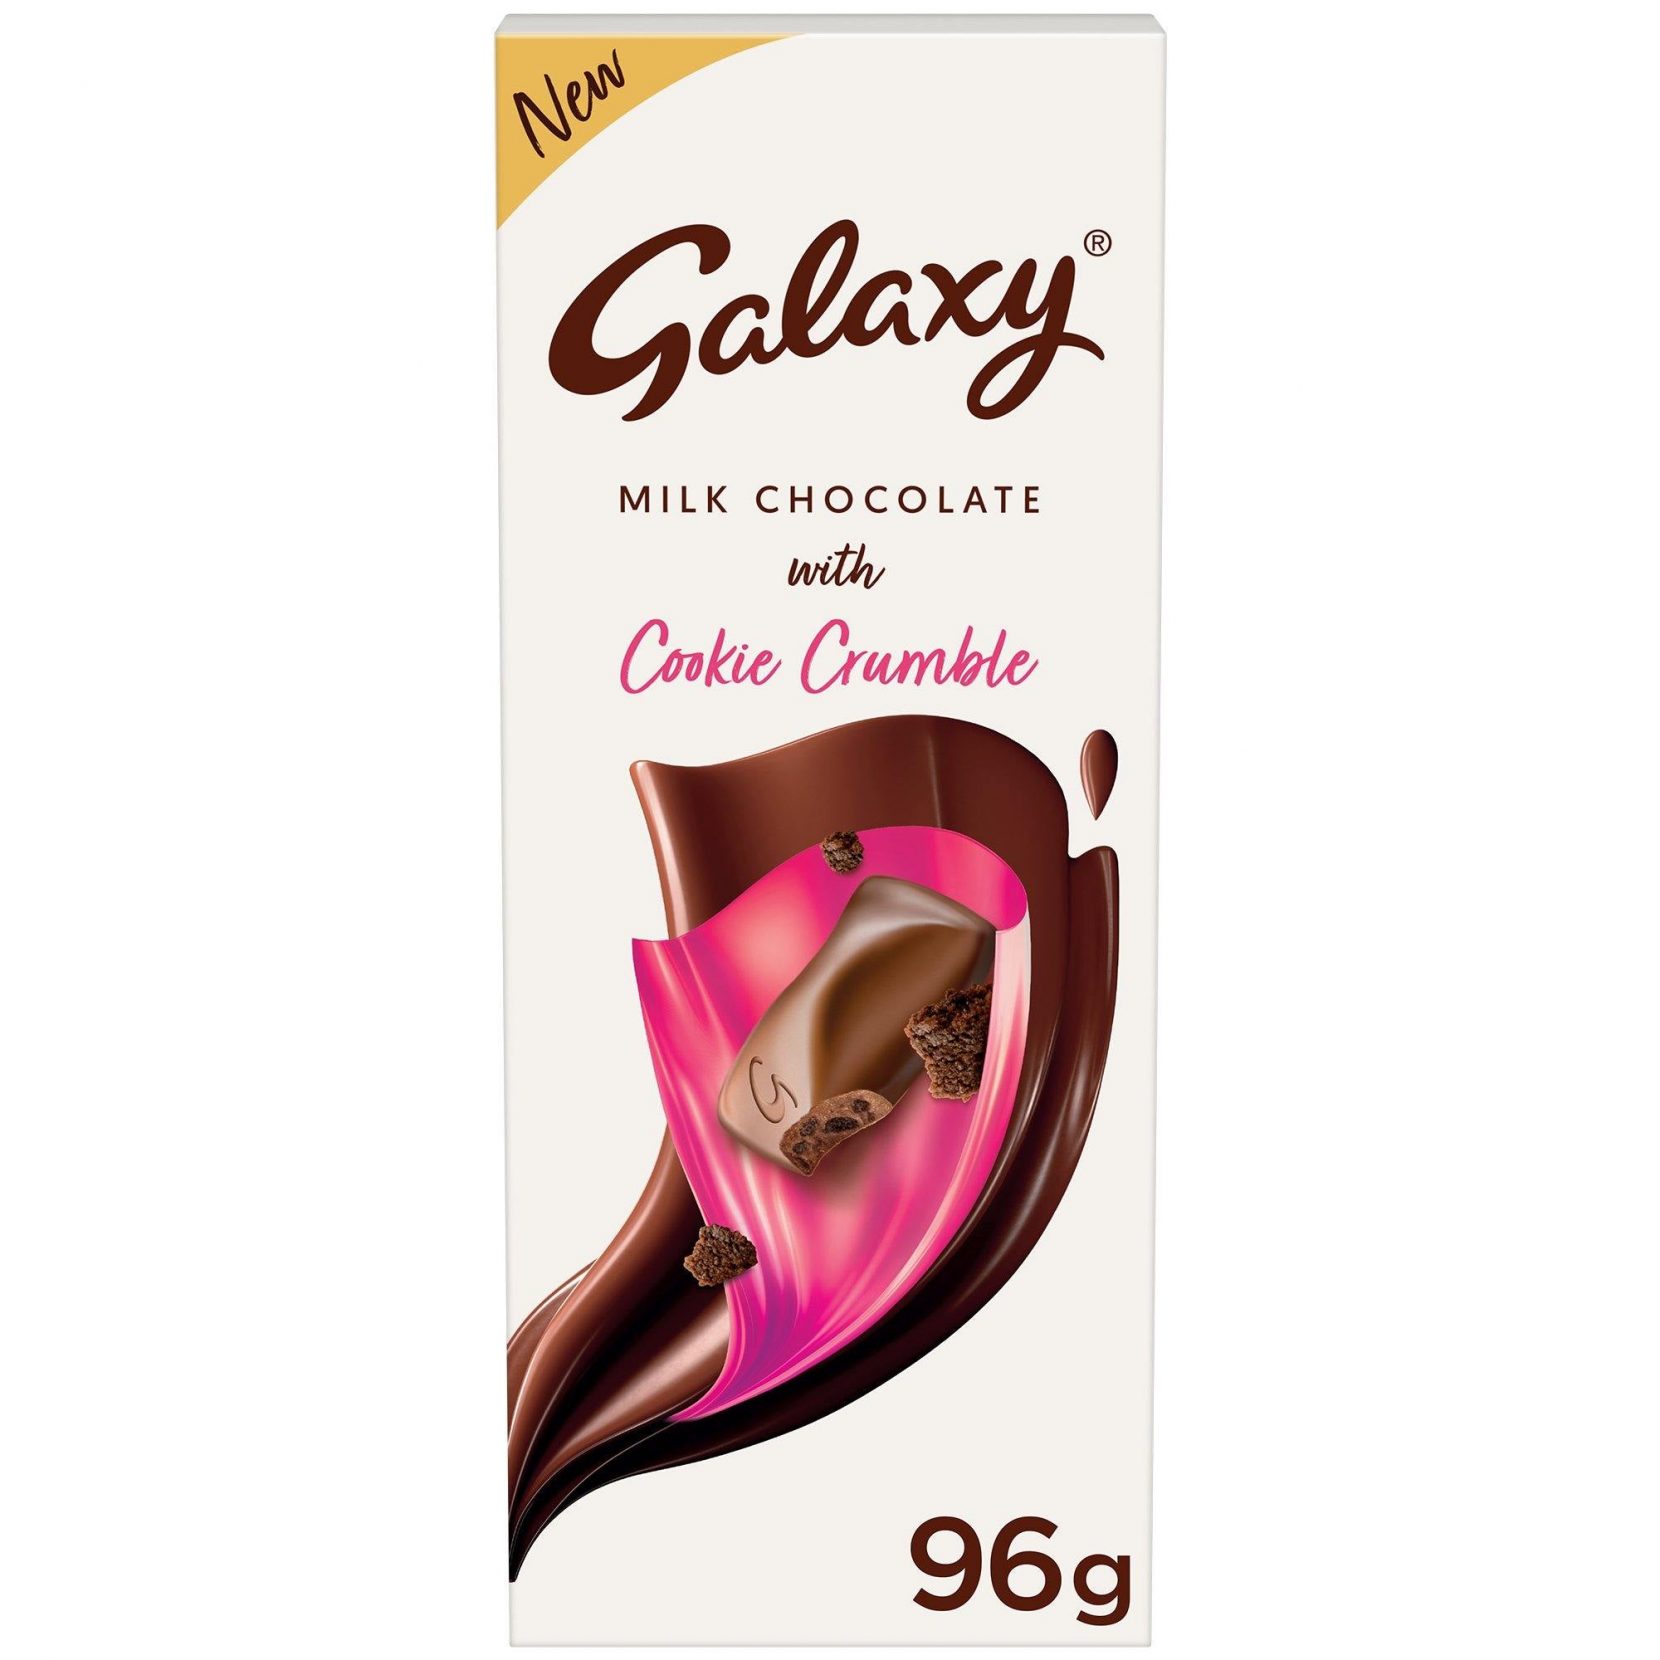 Galaxy milk chocolate 96gm